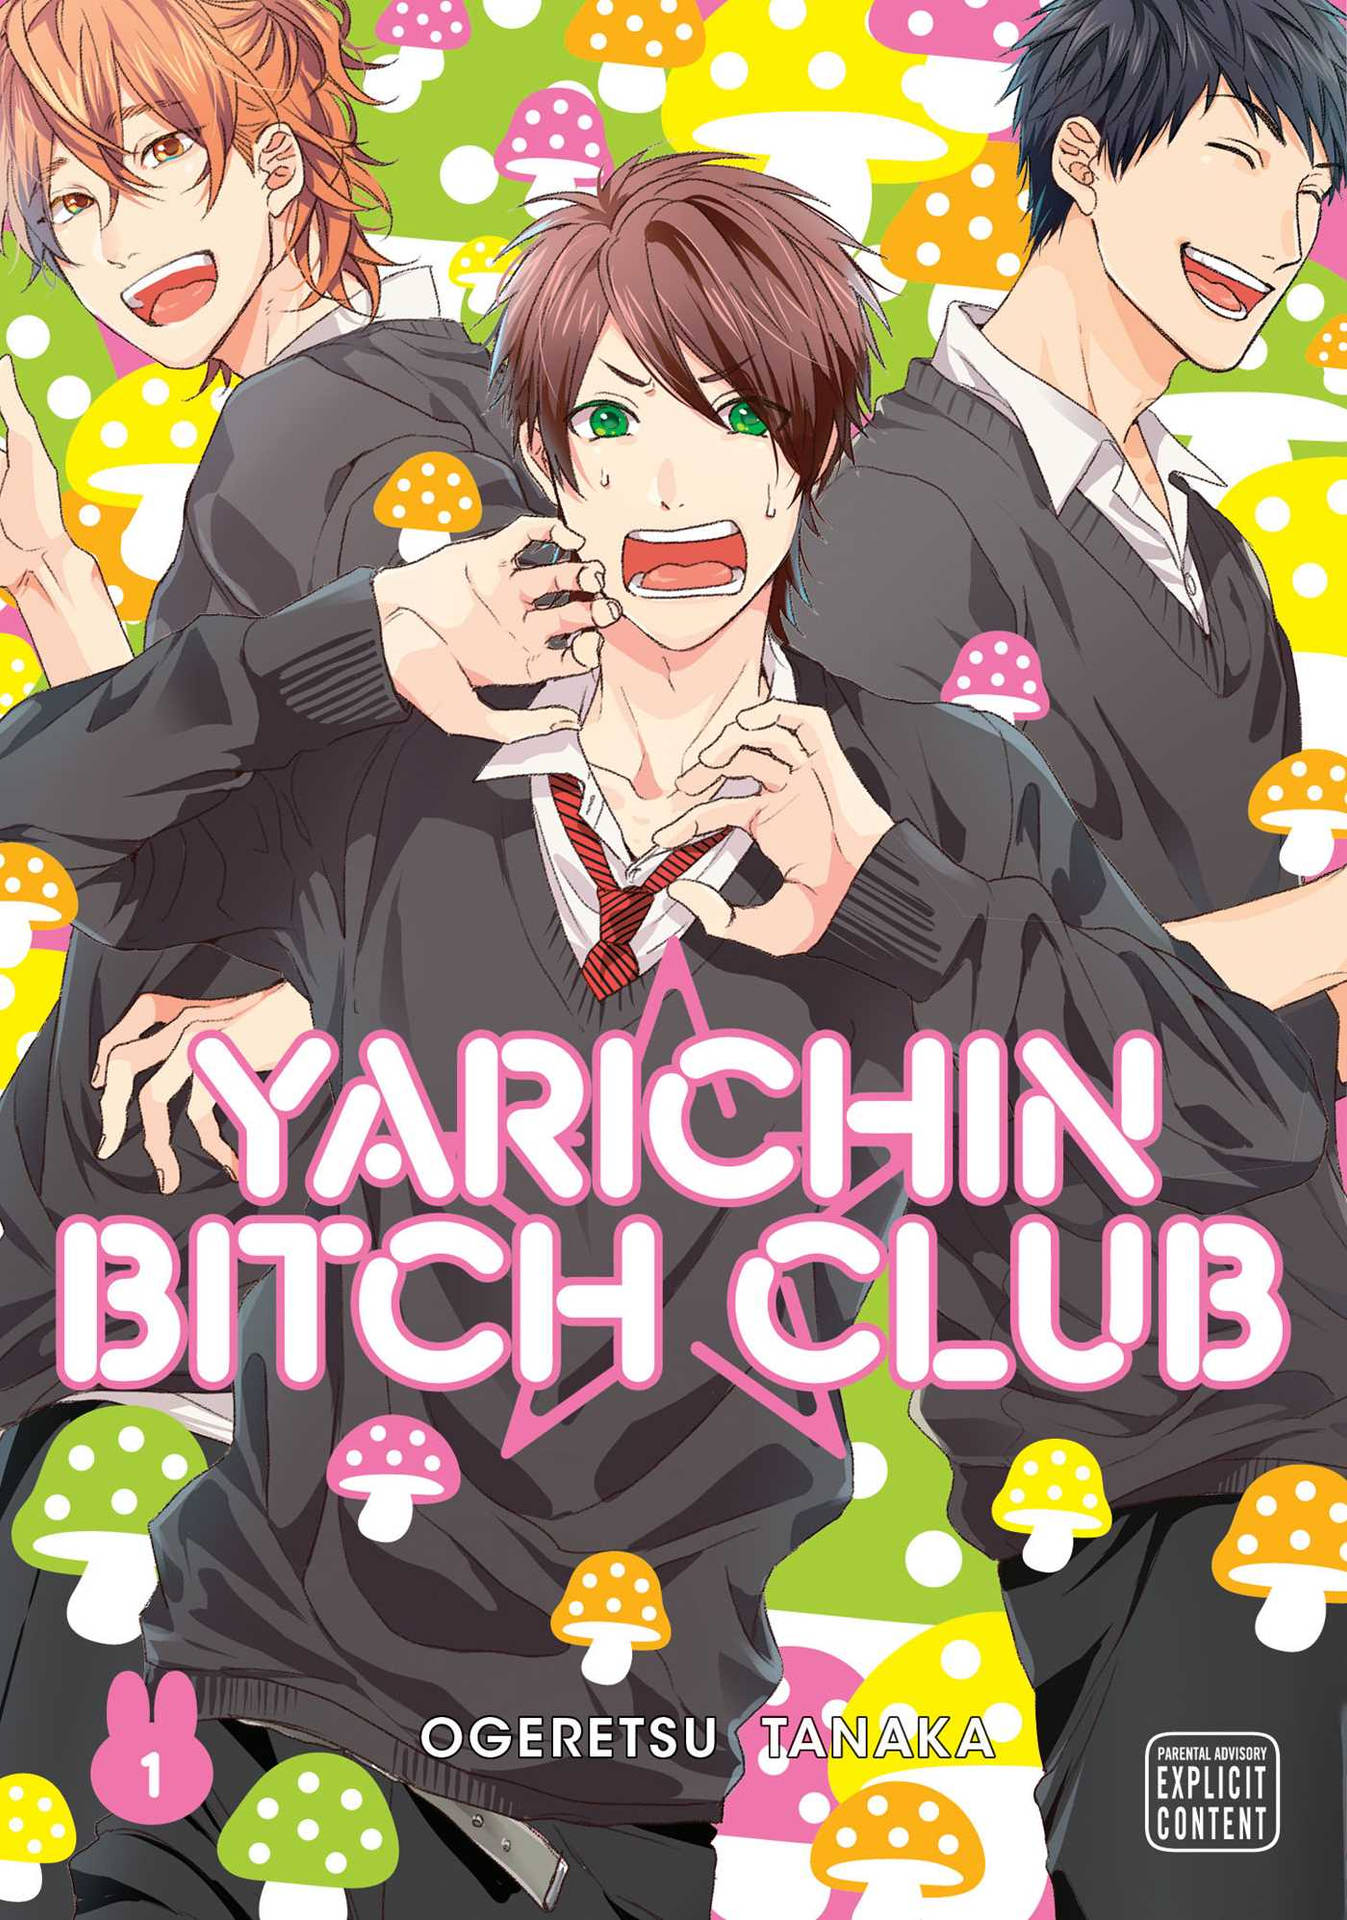 Yarichin Bitch Club Protagonists Cover Background